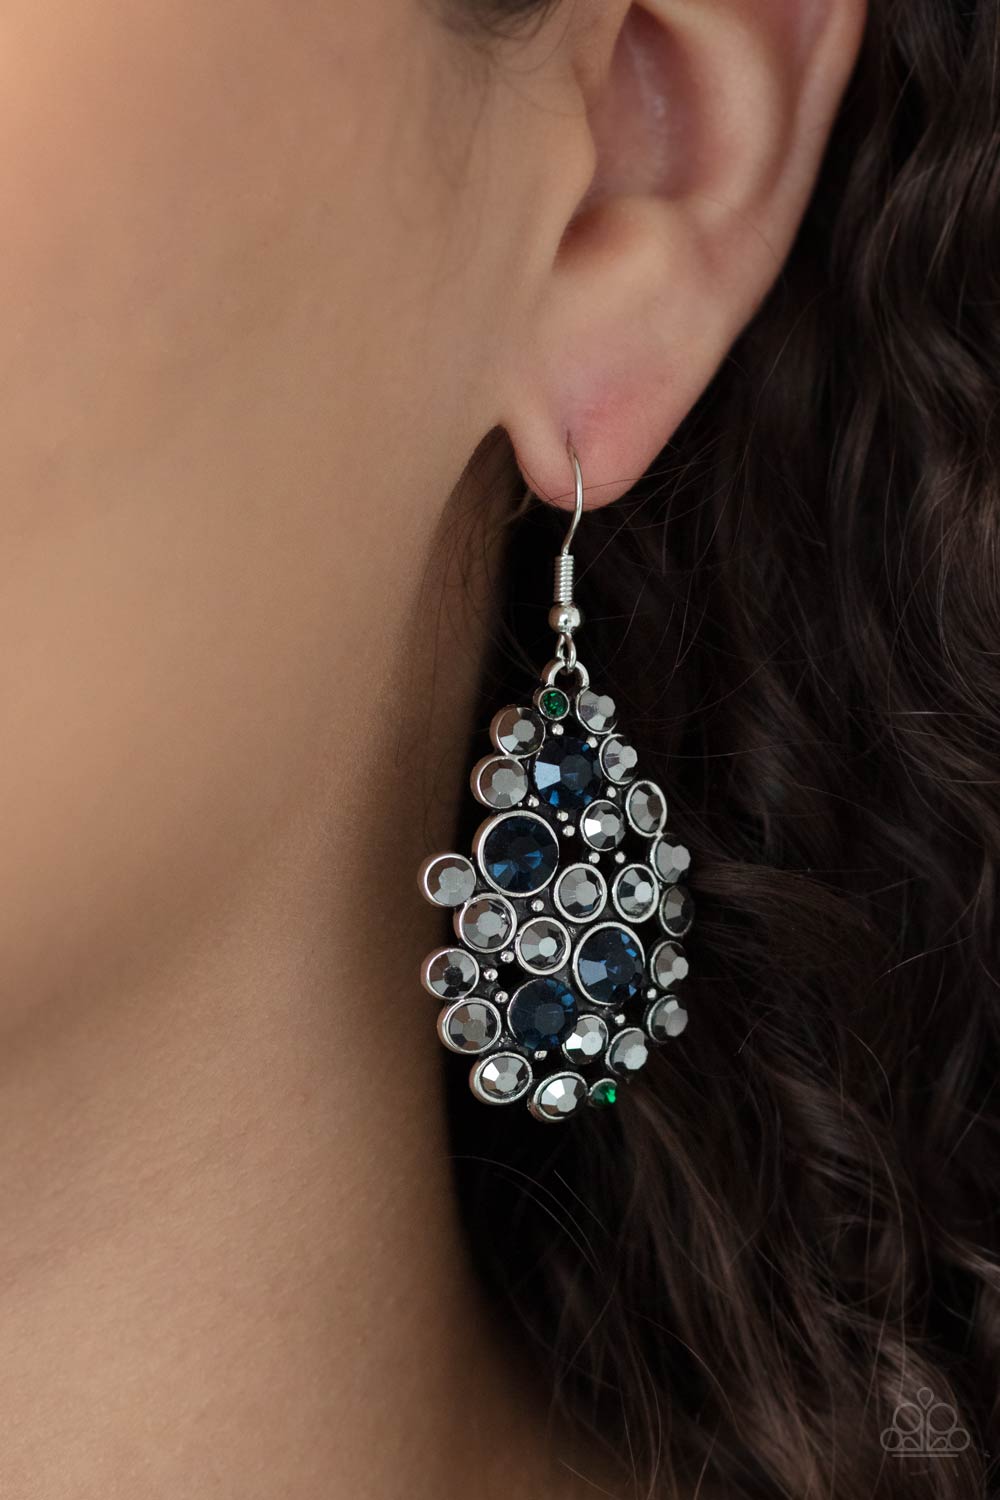 Smolder Effect Multi, Blue, Green and Hematite Rhinestone Earrings - Paparazzi Accessories- model - CarasShop.com - $5 Jewelry by Cara Jewels